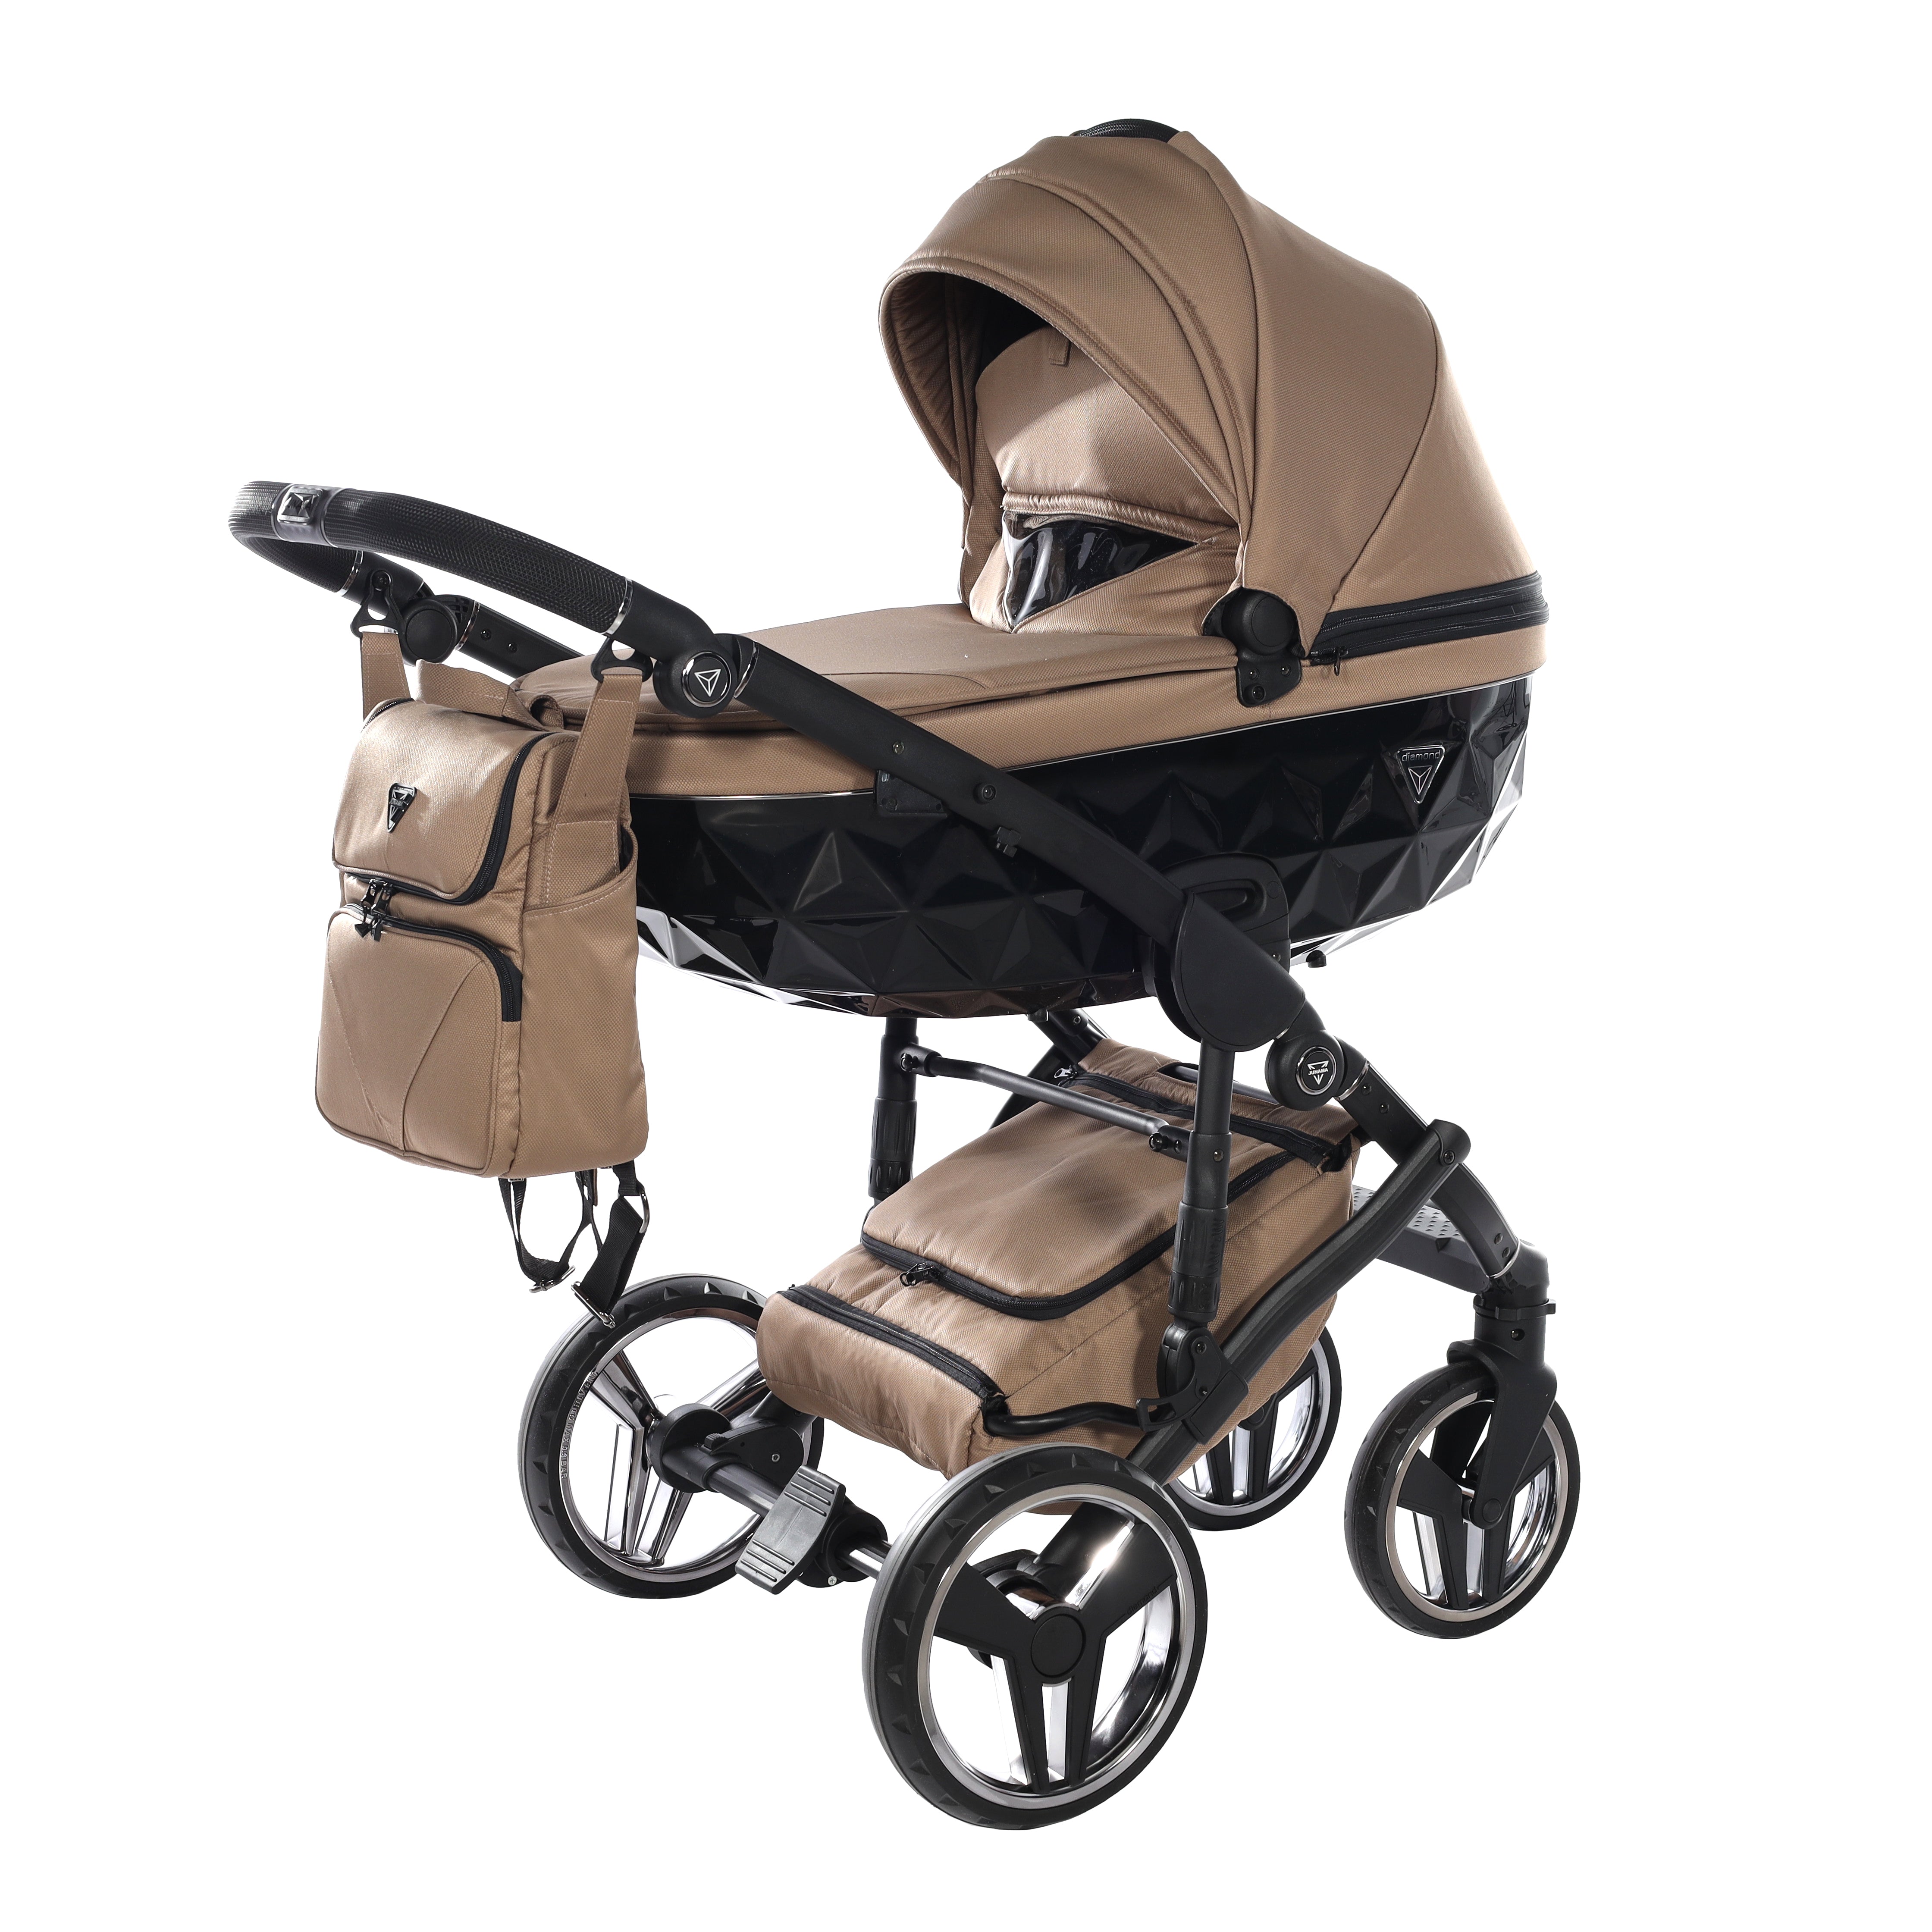 Junama BASIC, baby stroller and bassinet 2 in 1 - BEIGE, Code number: JUNBSC04